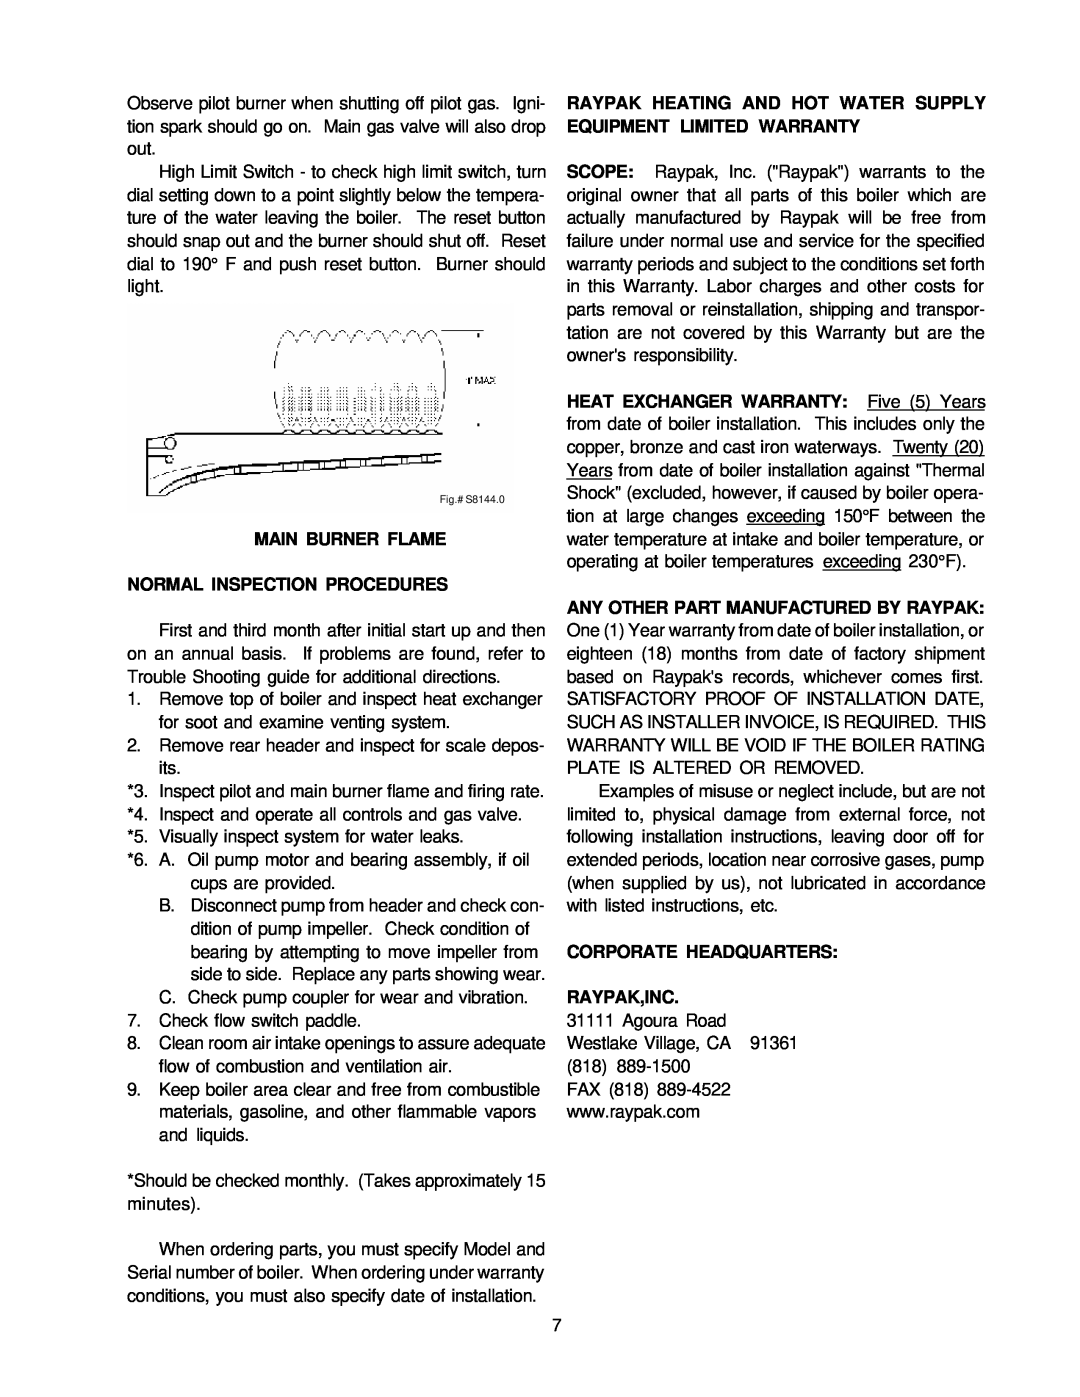 Raypak Gas Fired Boiler manual Main Burner Flame Normal Inspection Procedures, Corporate Headquarters Raypak,Inc 